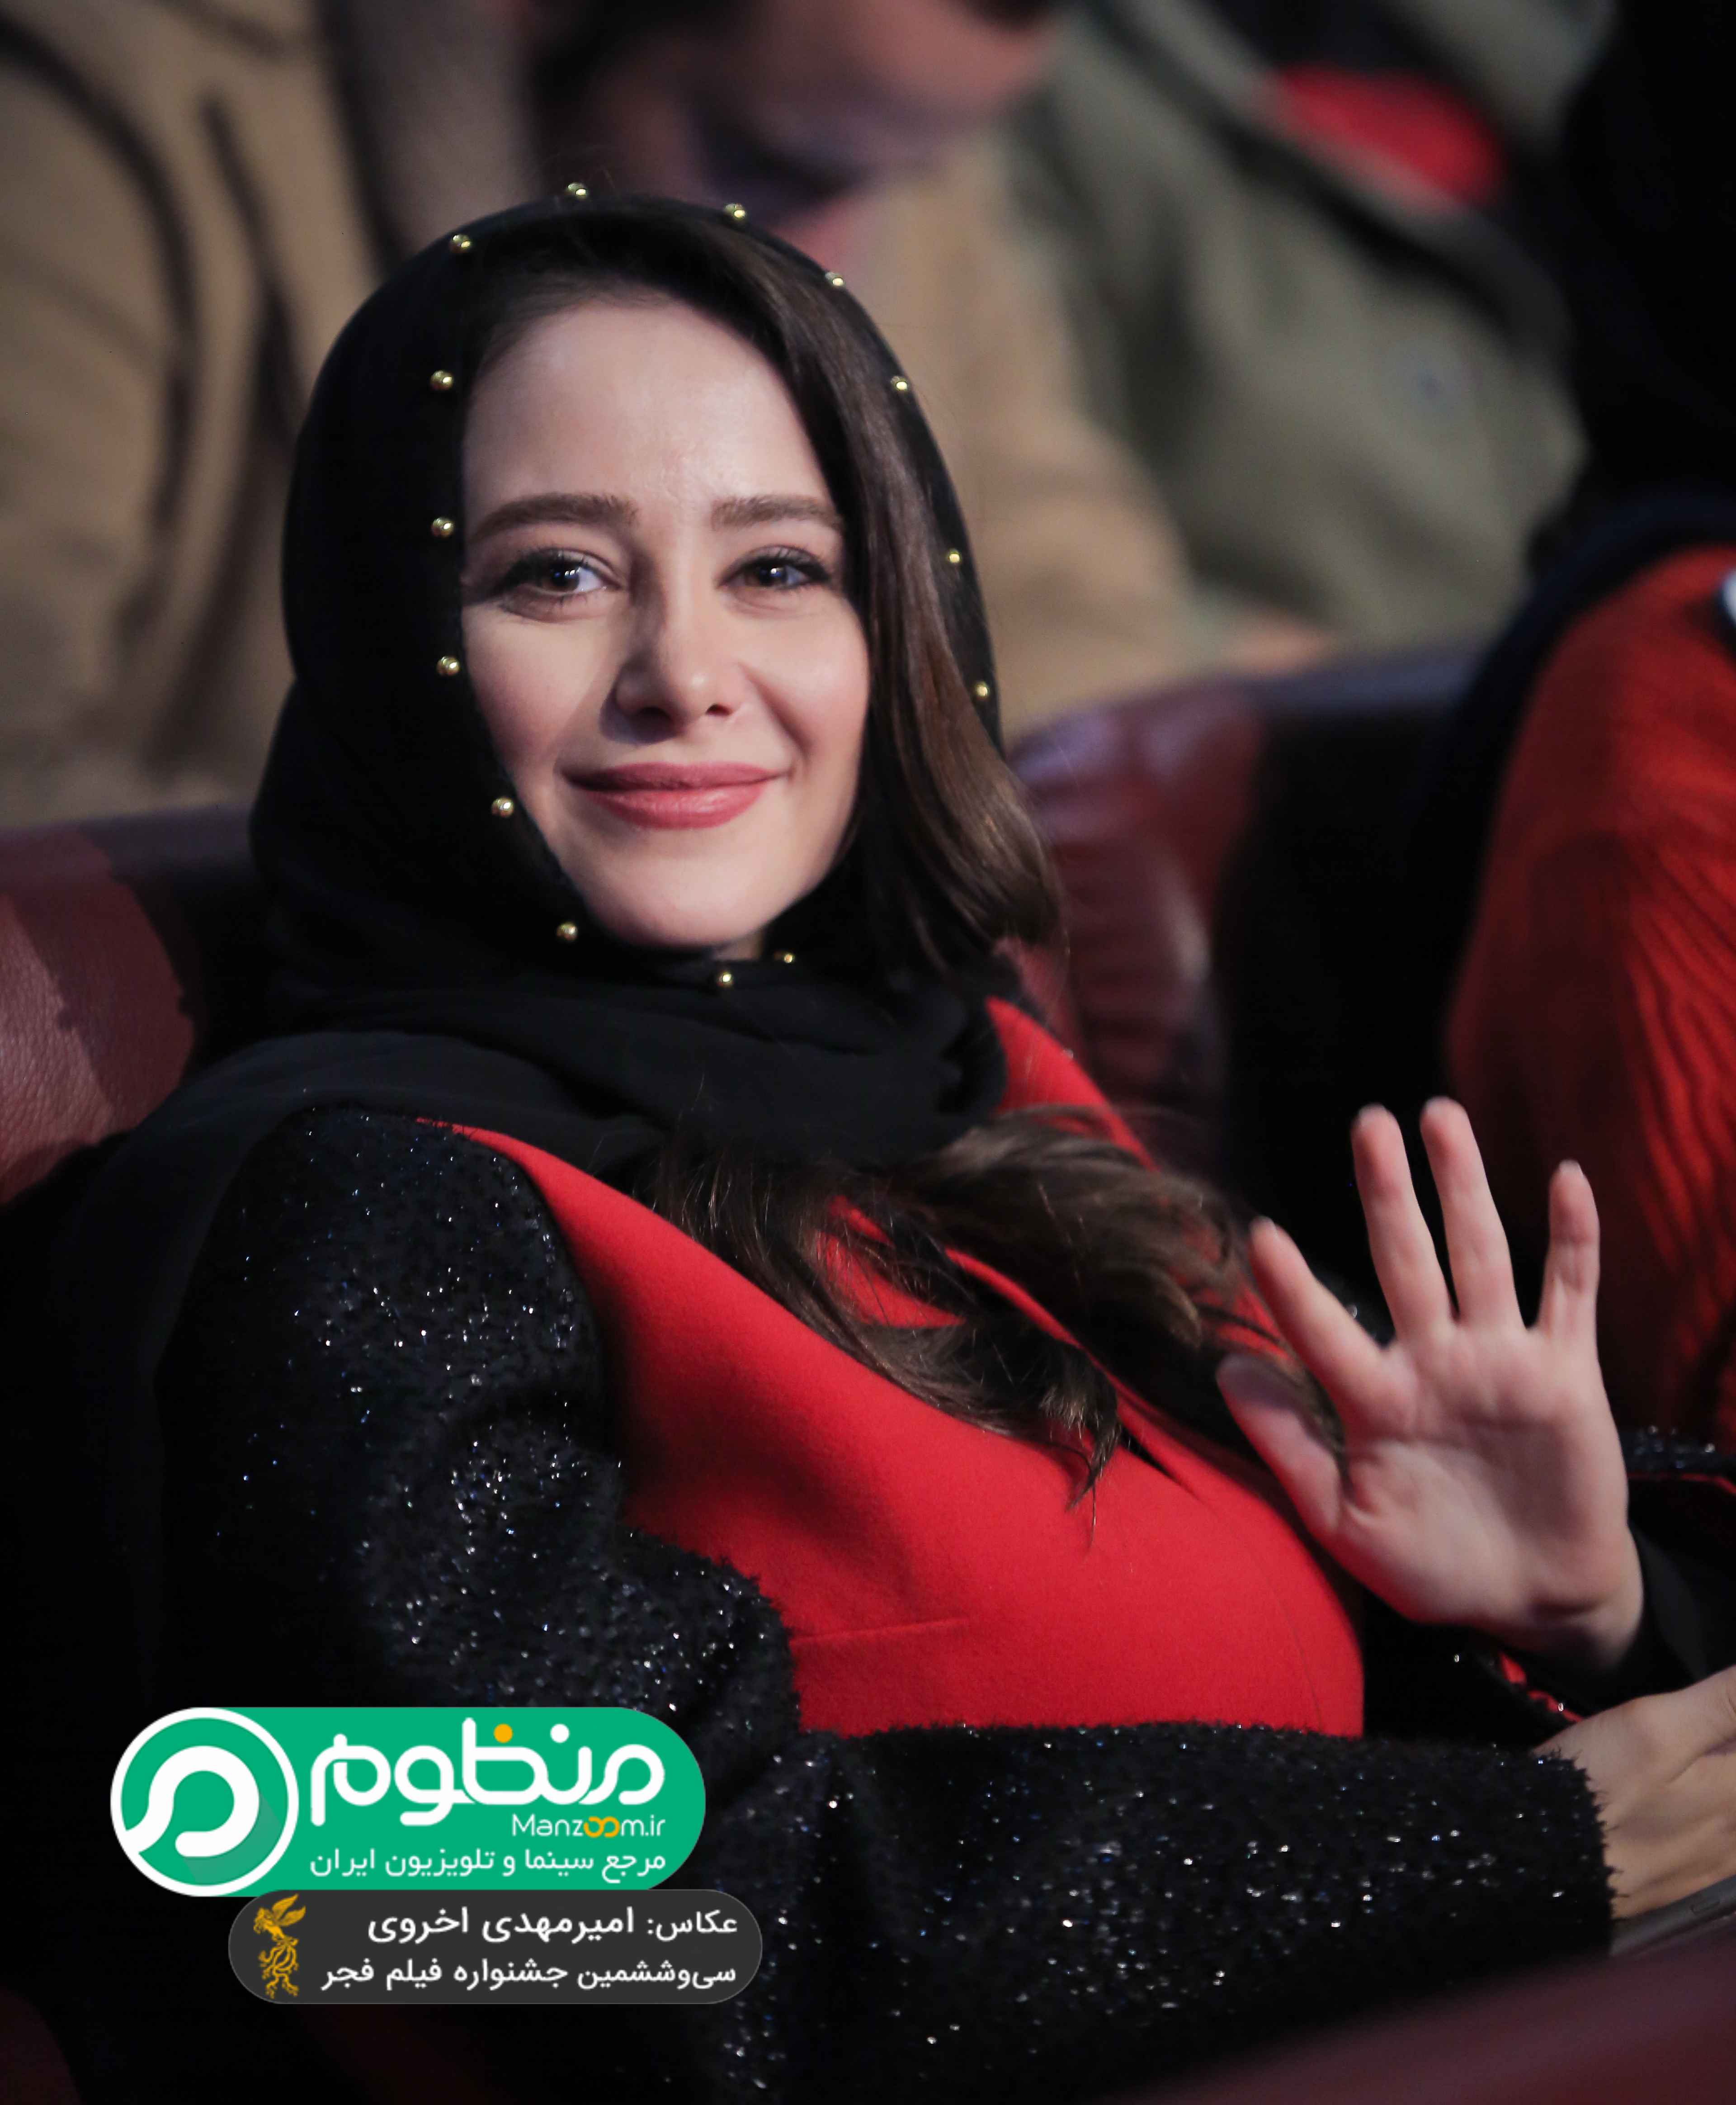 الناز حبیبی، بازیگر سینما و تلویزیون - عکس جشنواره